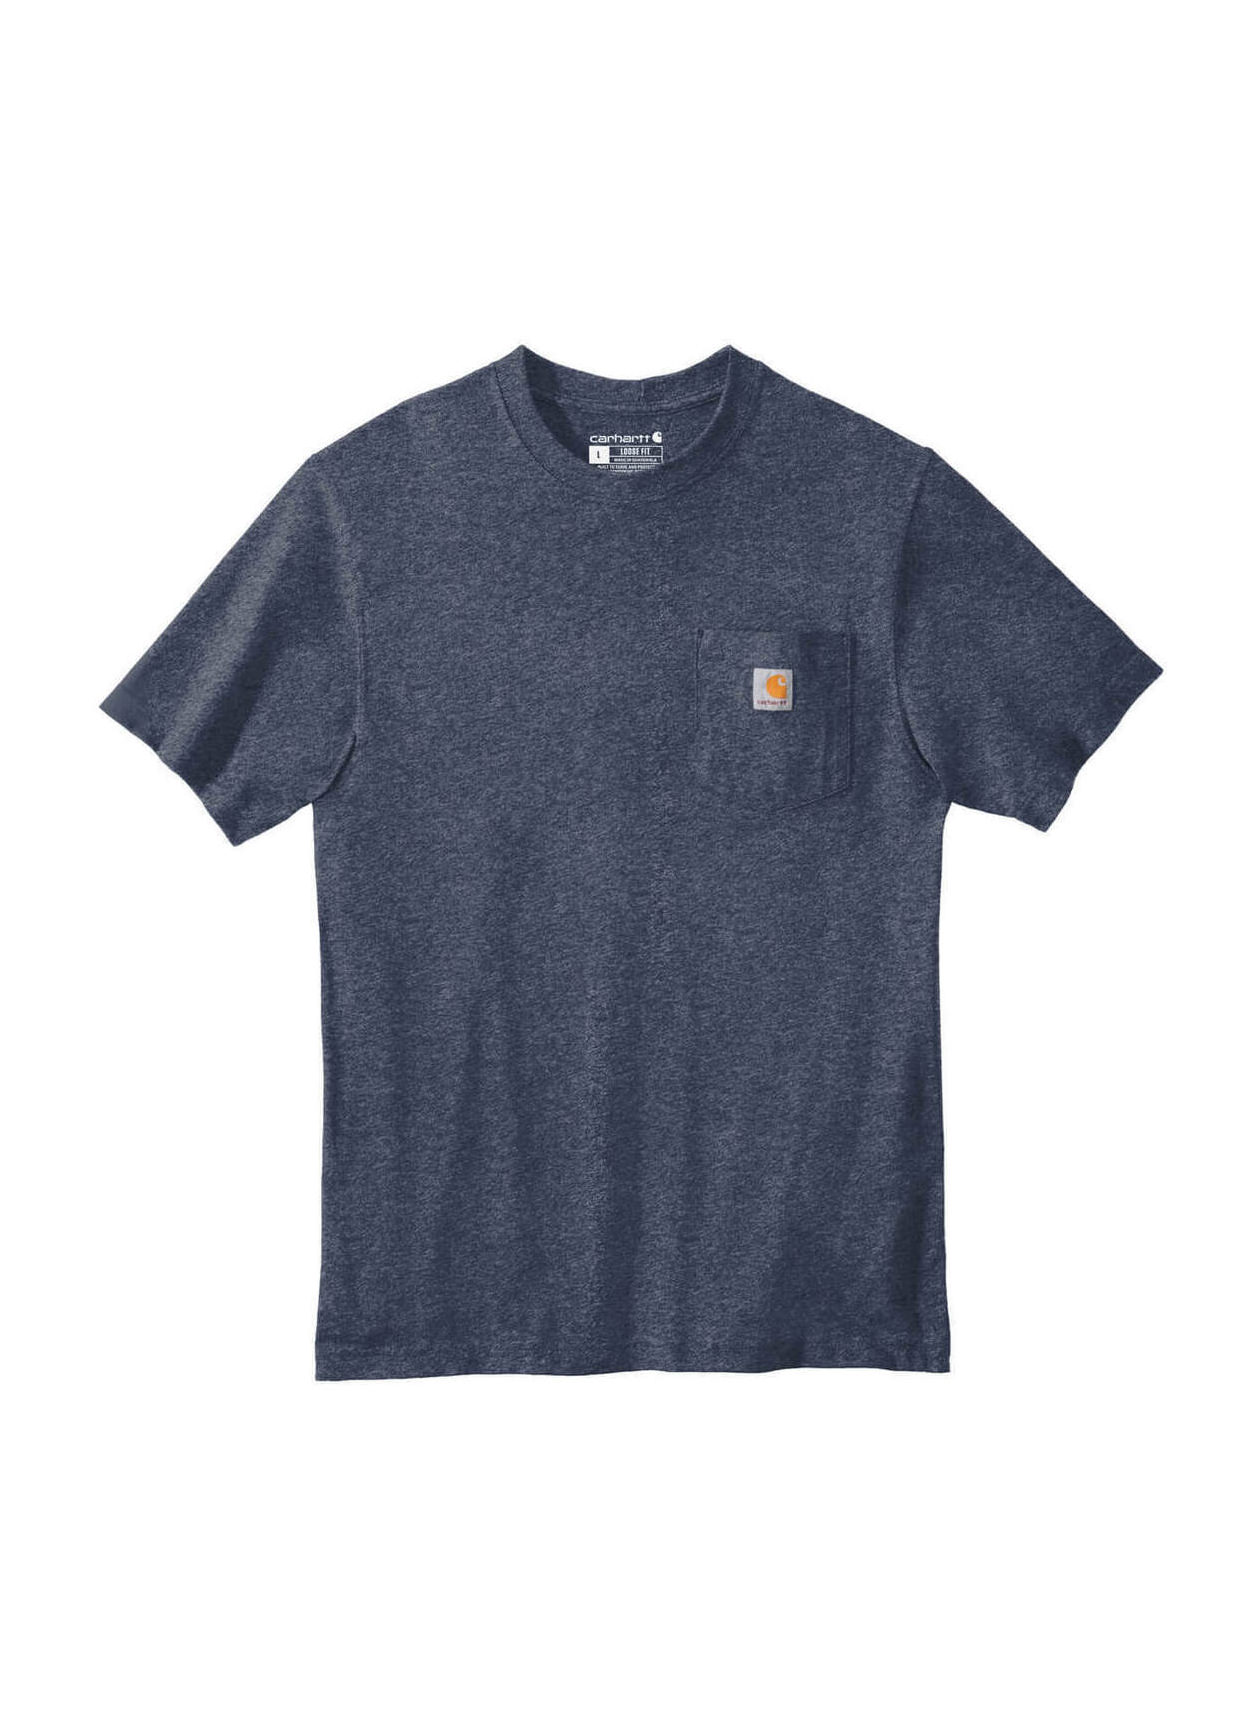 Branded Carhartt Men's Dark Cobalt Blue Heather Workwear Pocket T-Shirt ...